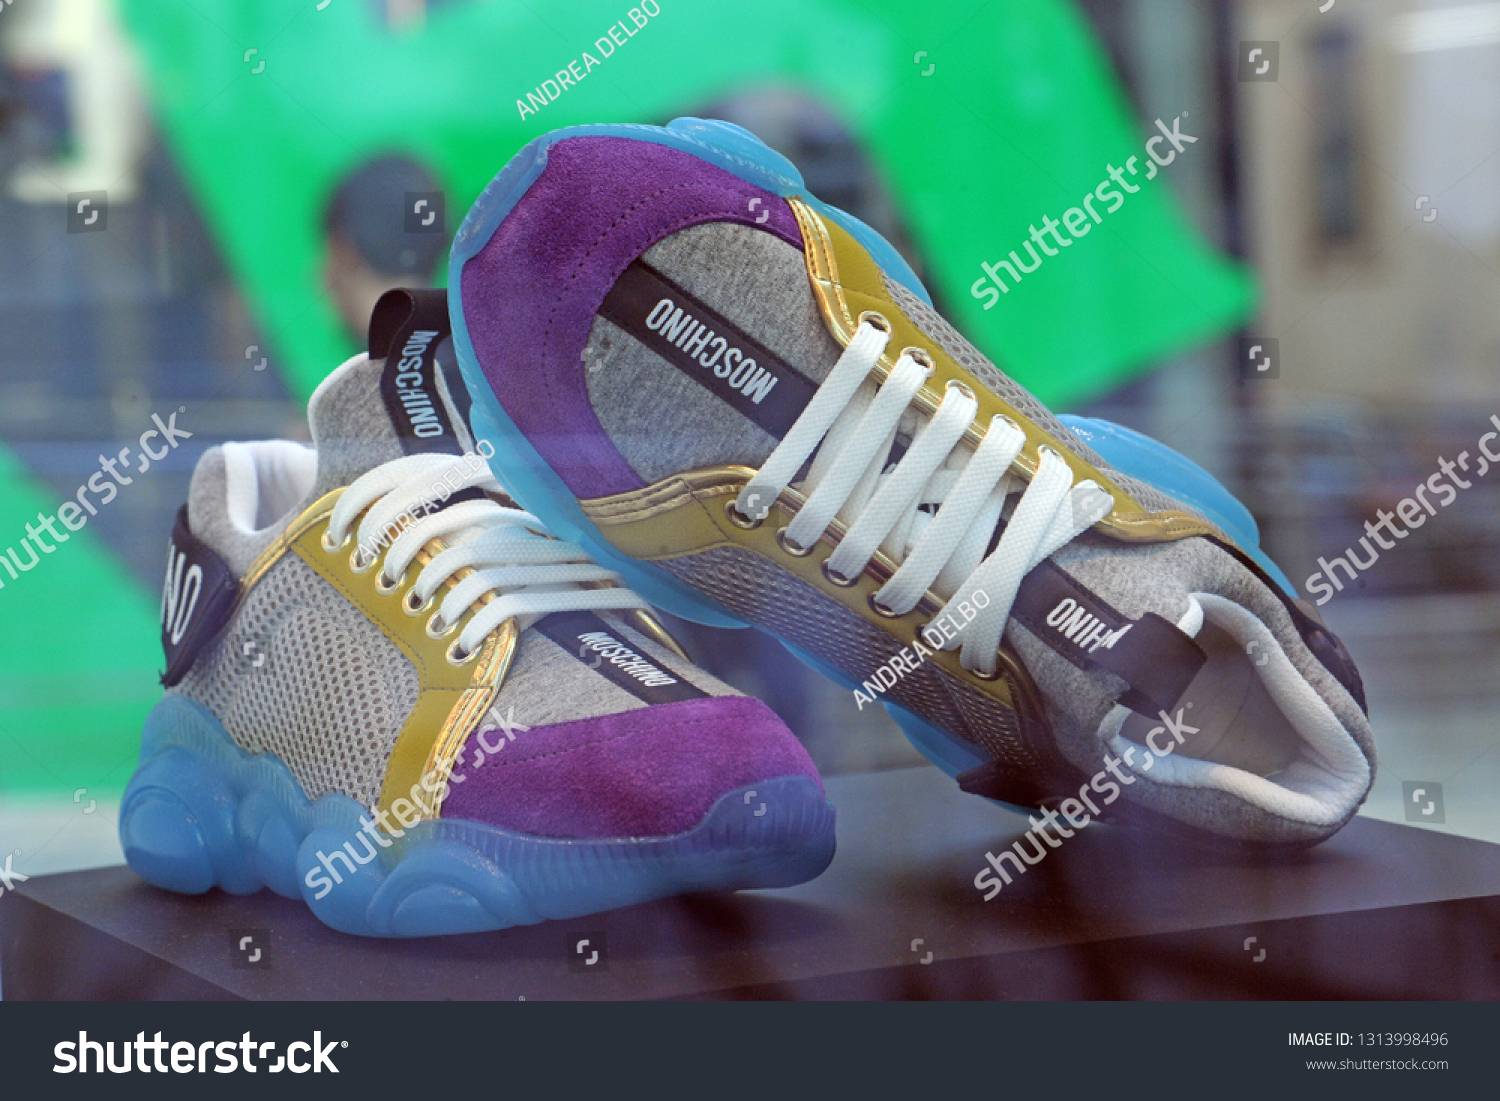 moschino shoes 2019